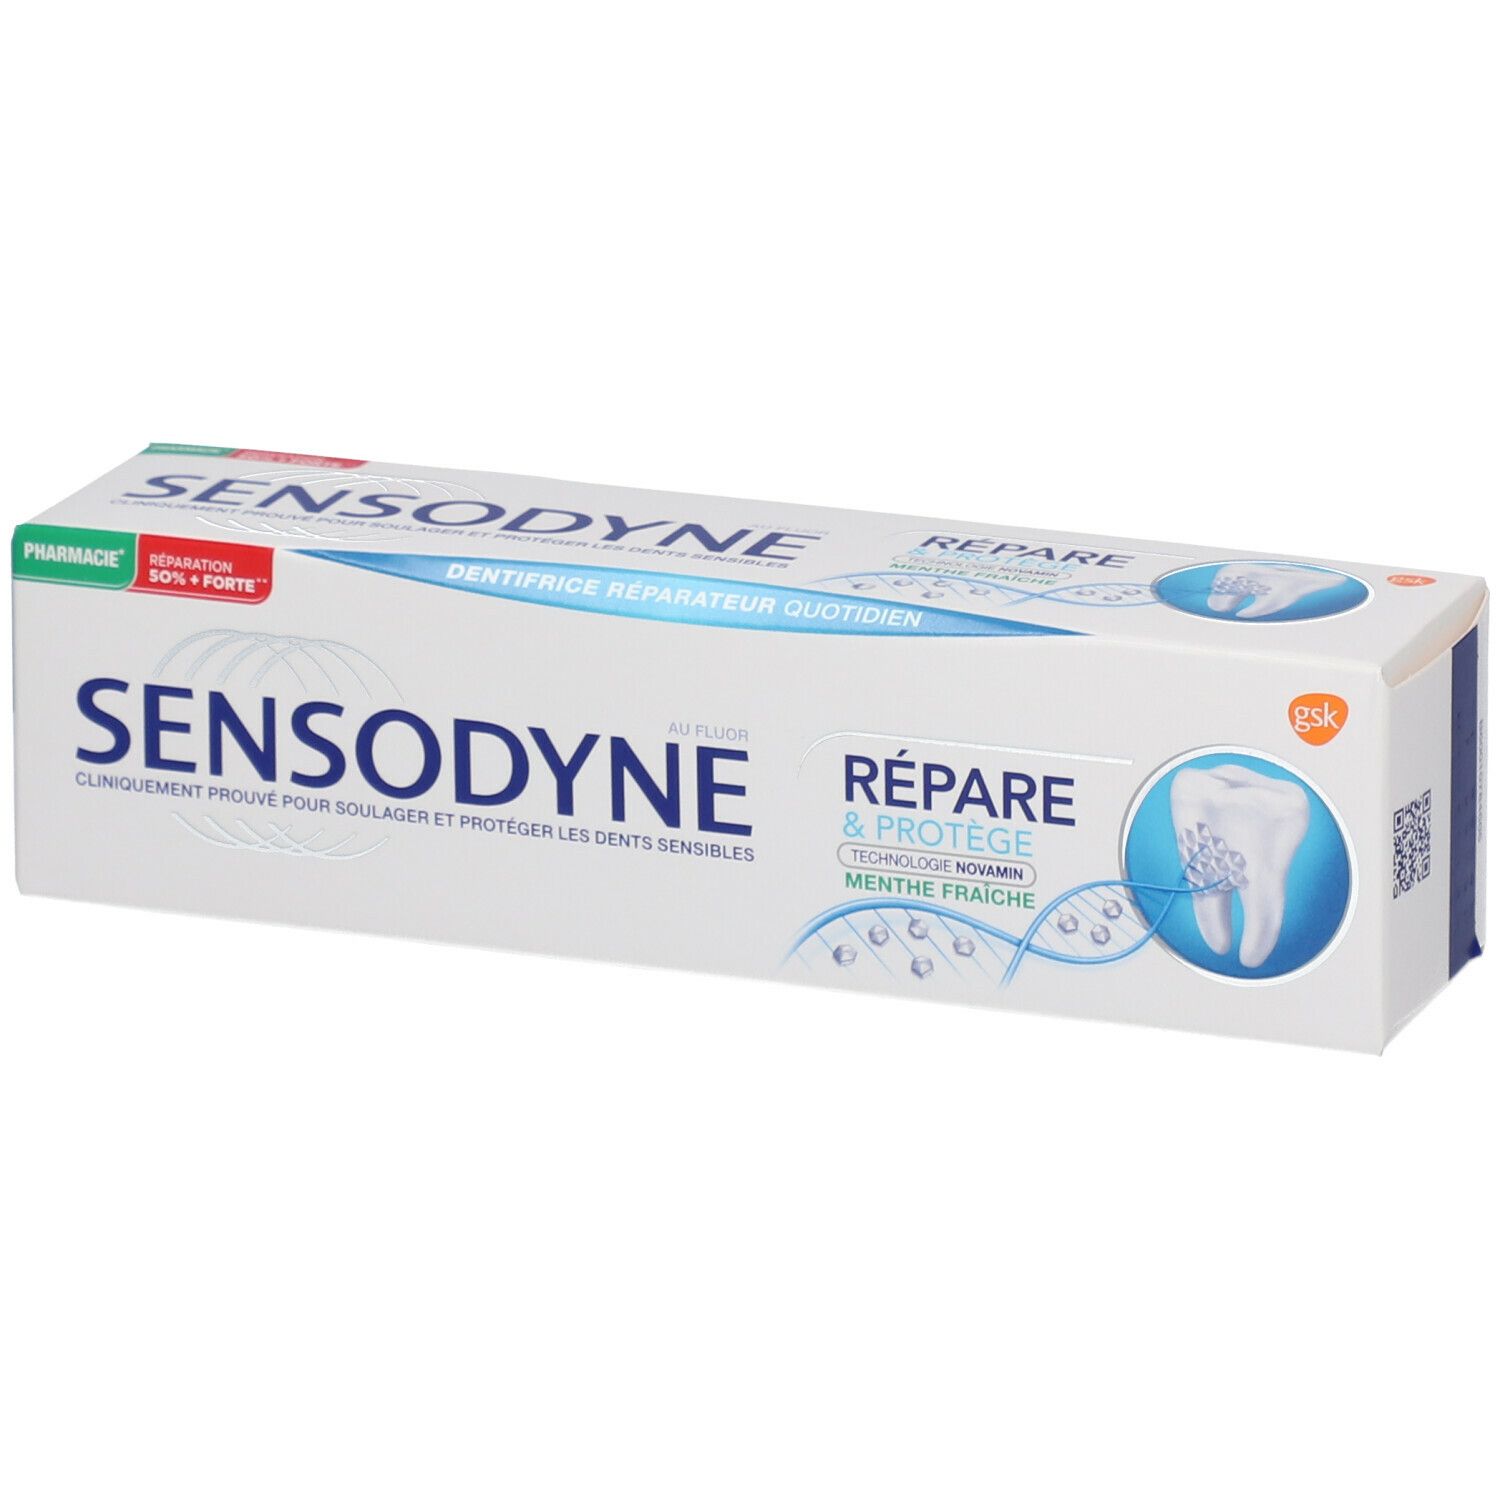 Sensodyne® Répare & Protège Menthe fraîche